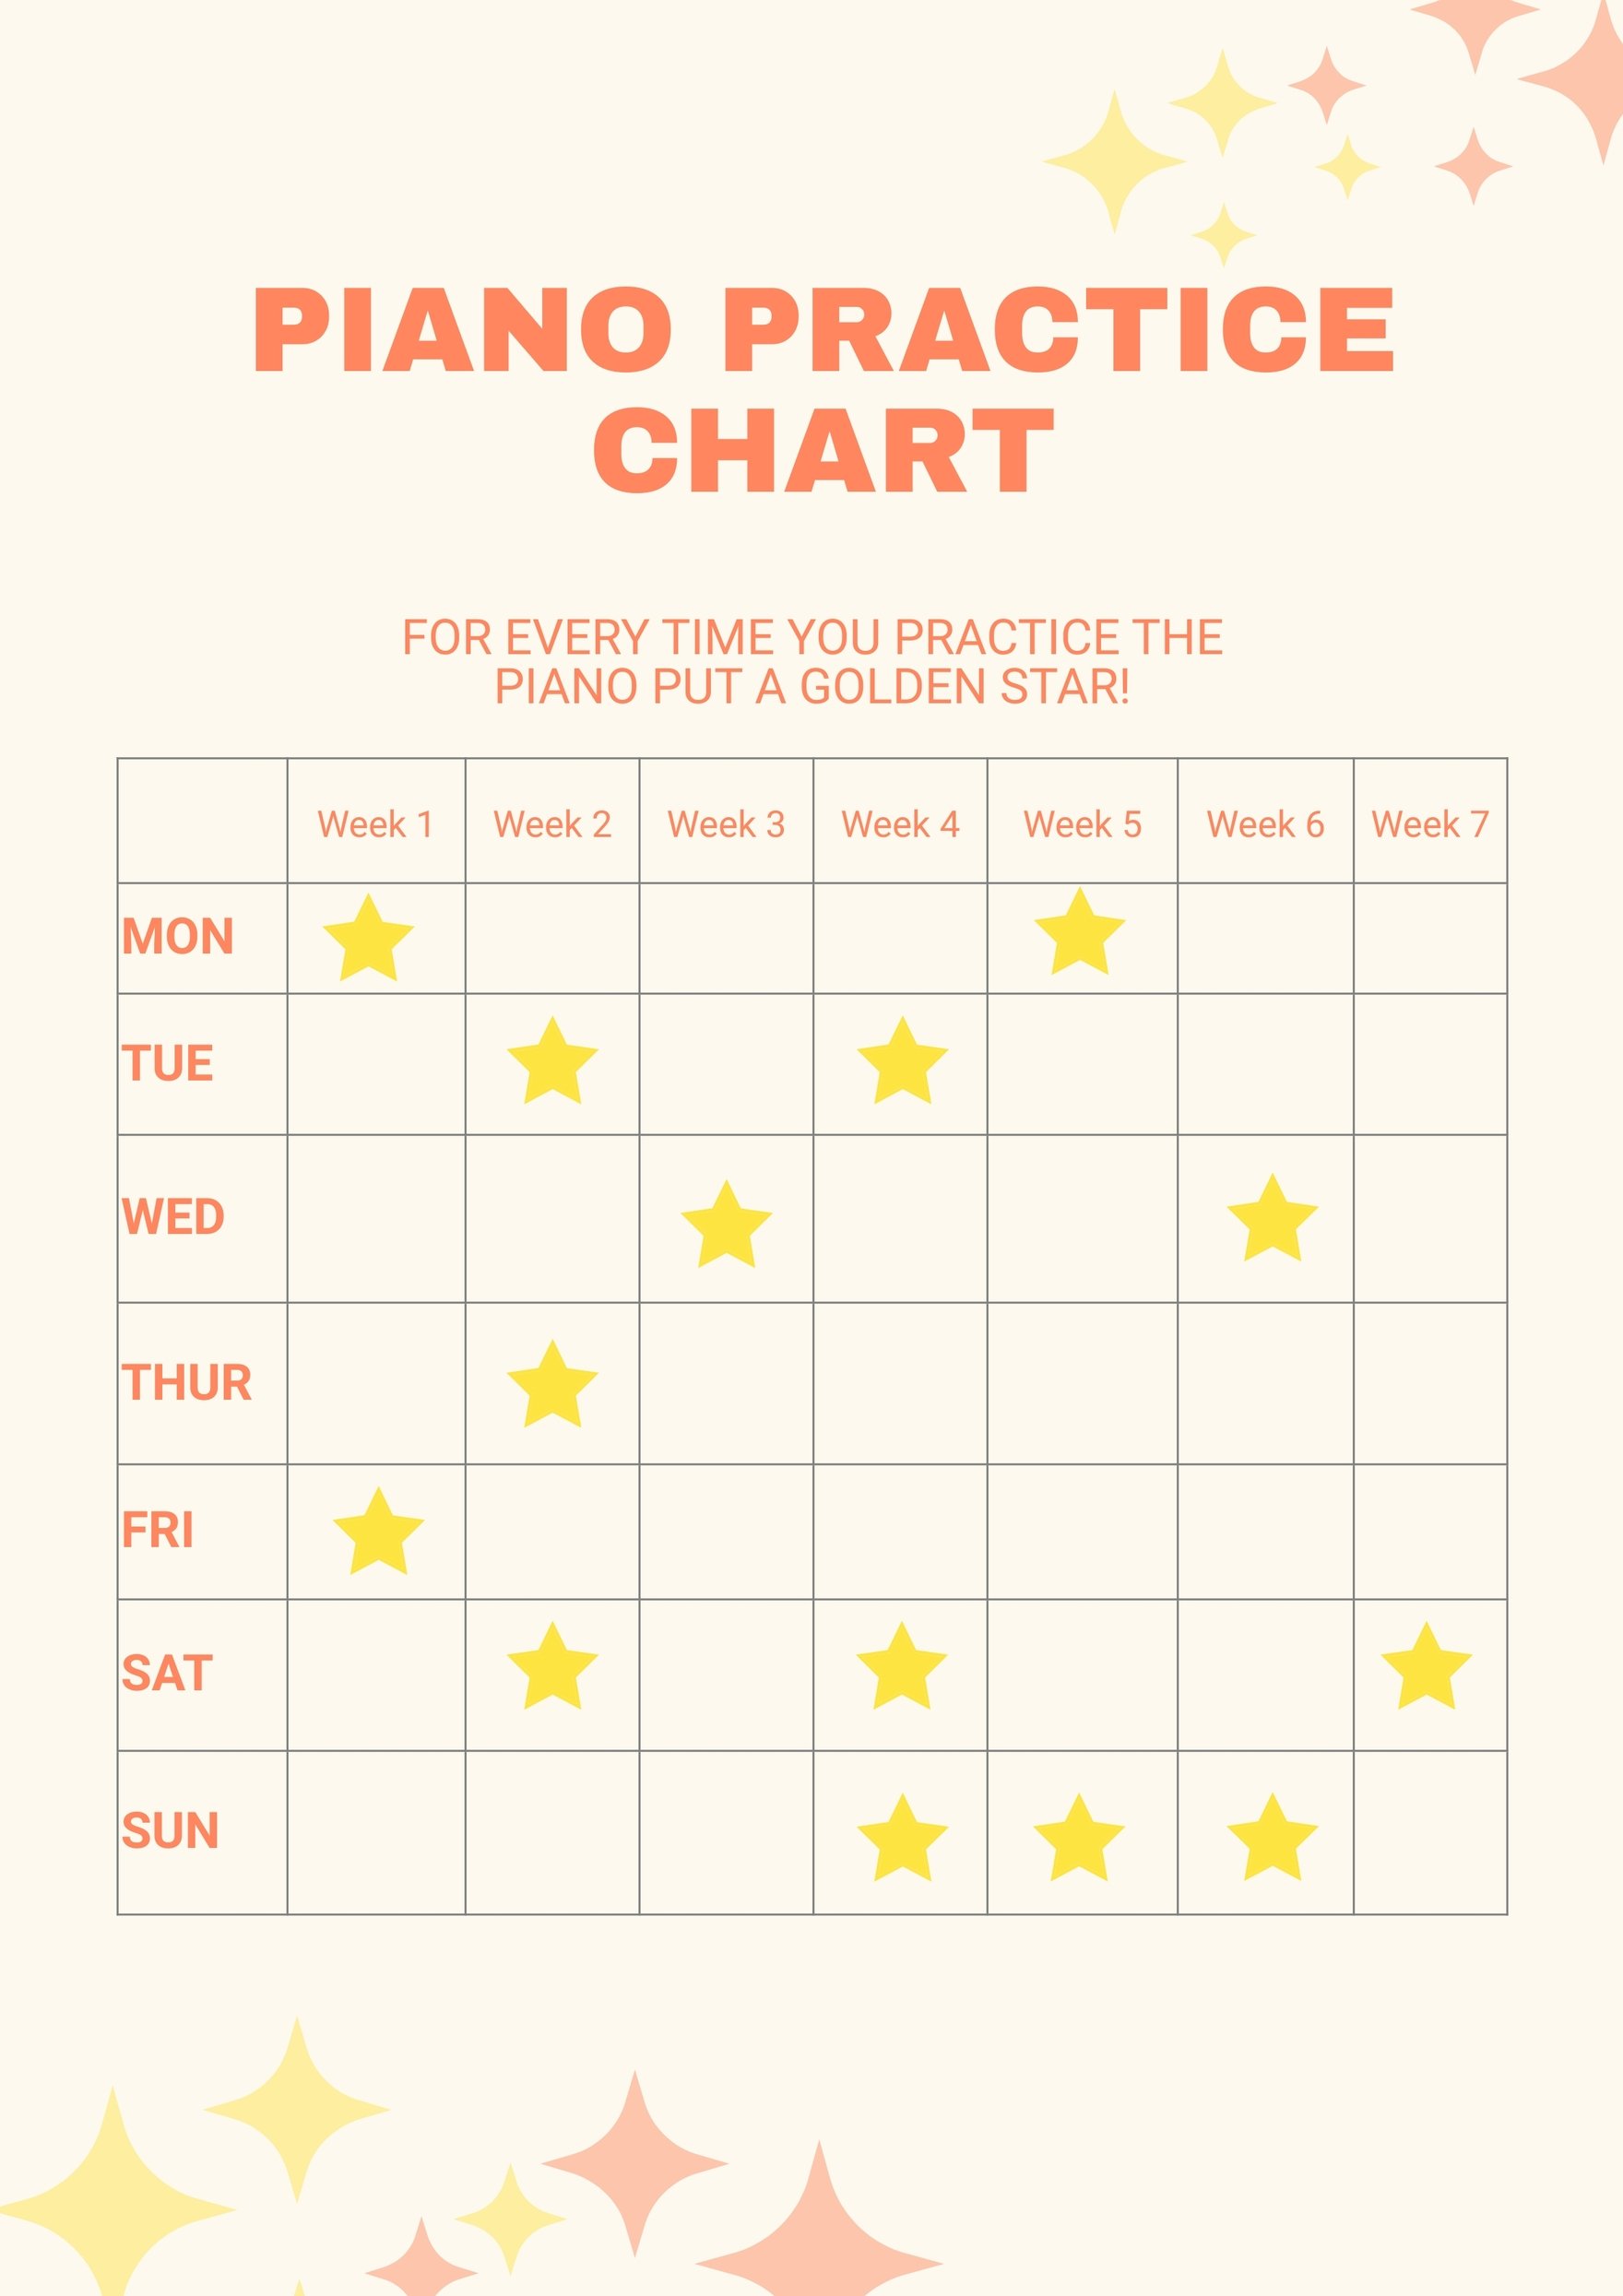 Piano Practice Chart in PDF, Illustrator